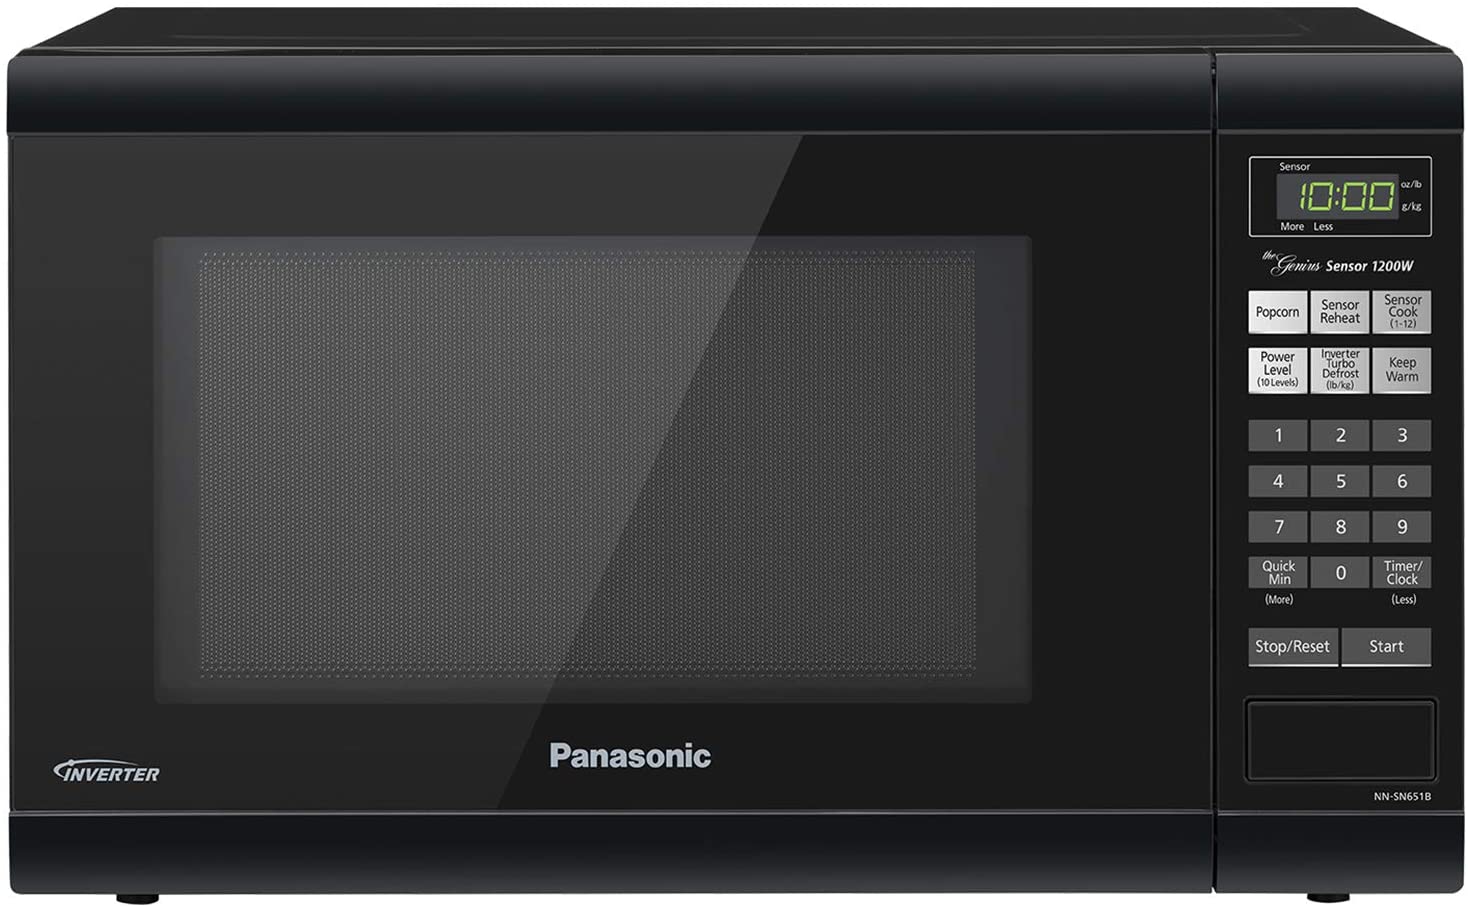 Panasonic Countertop Microwave Oven With Inverter Technology | Jikonitaste